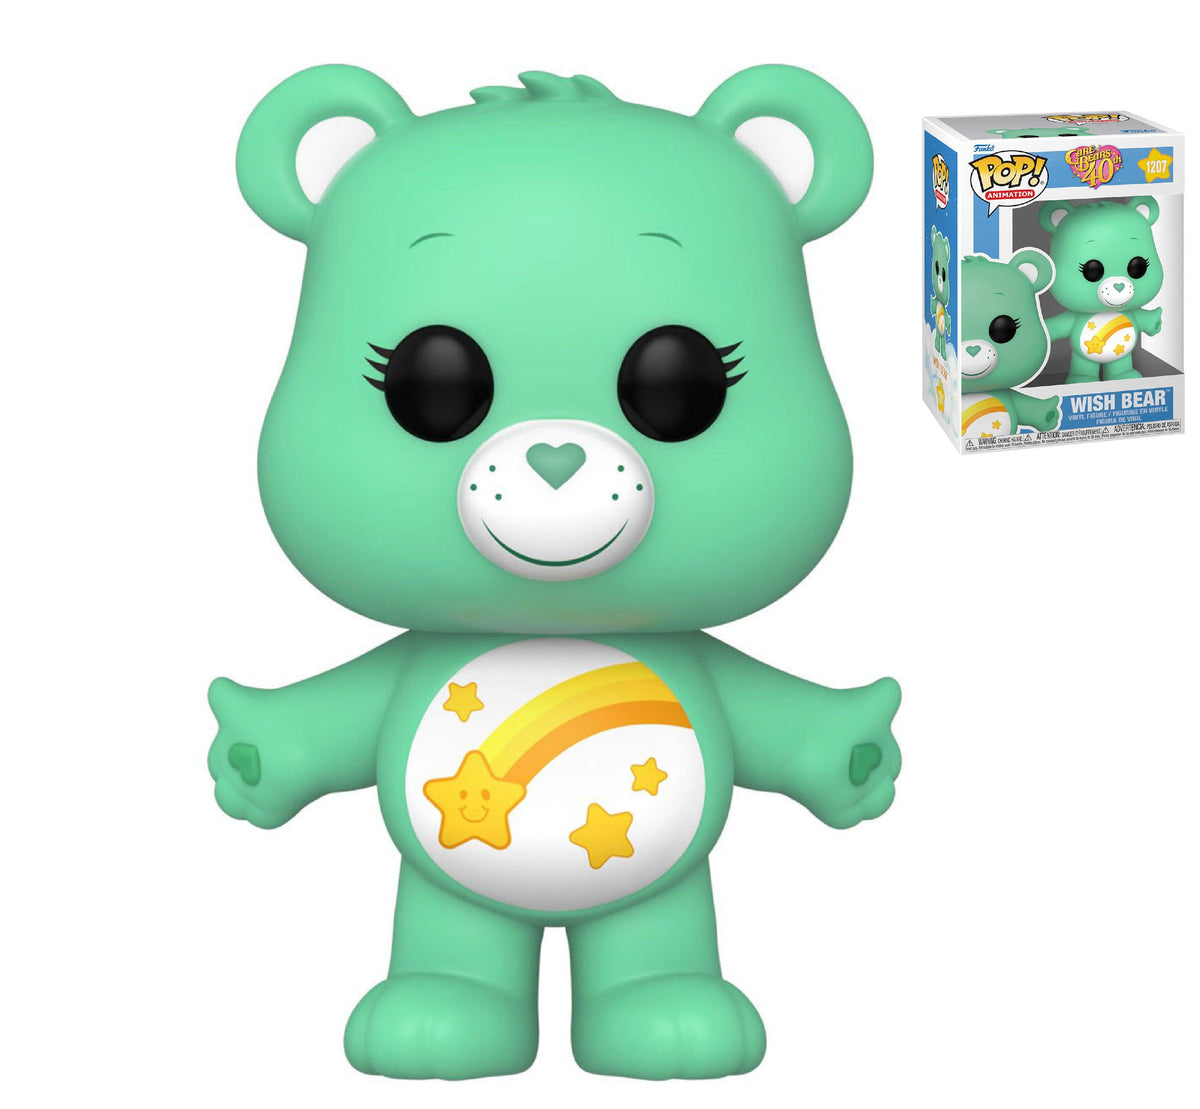 FUNKO POP! ANIMATION: Care Bears - Wish Bear